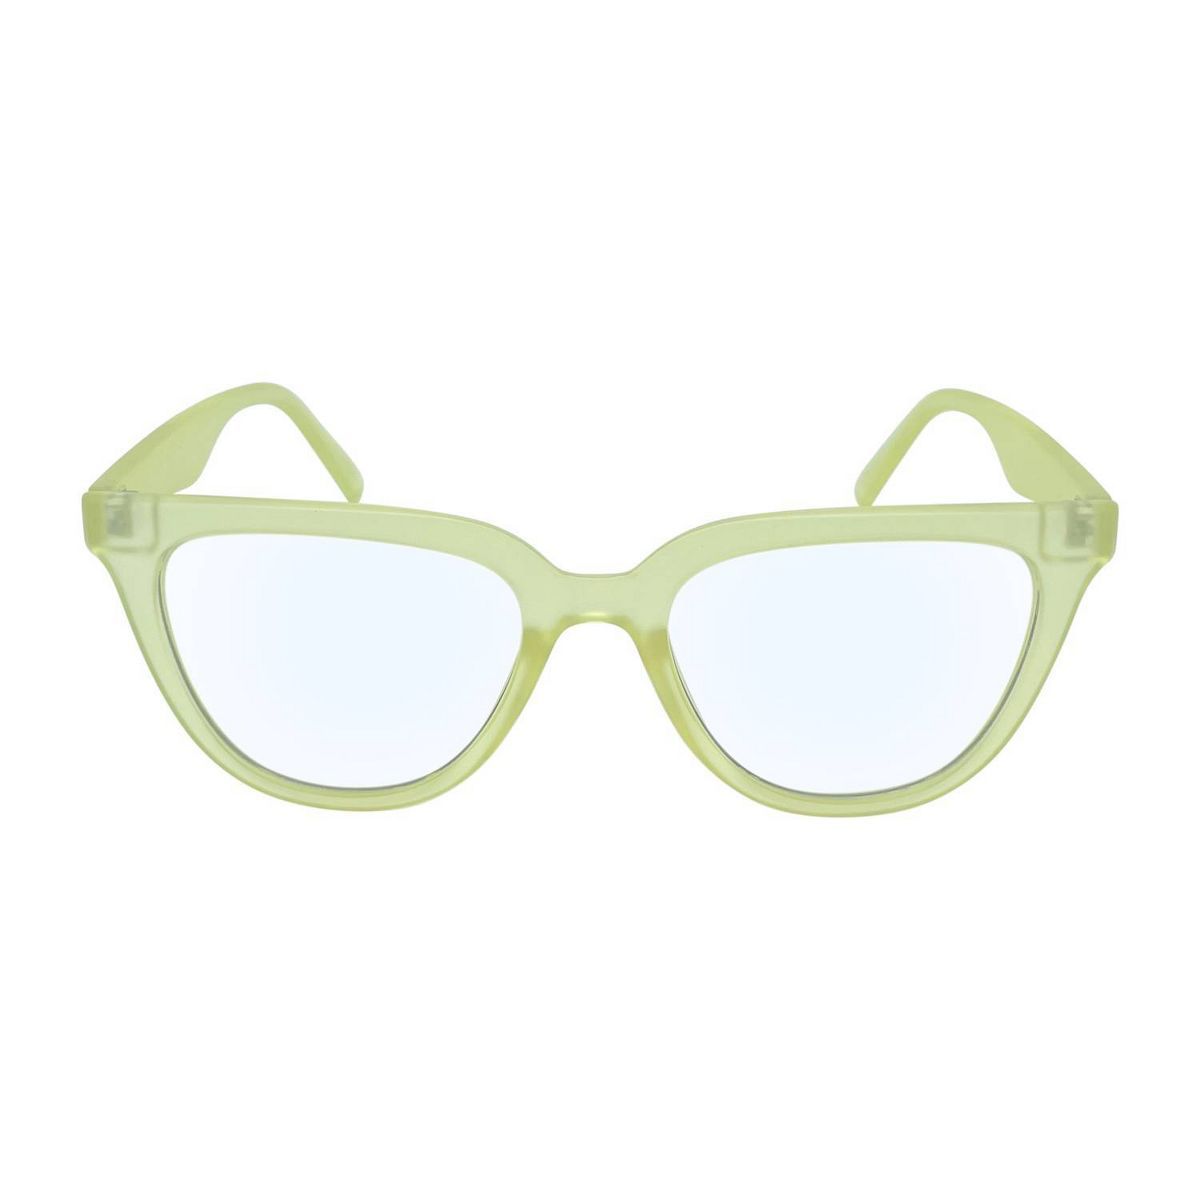 Matte Cateye Blue Light Filtering Glasses - Wild Fable™ Green | Target